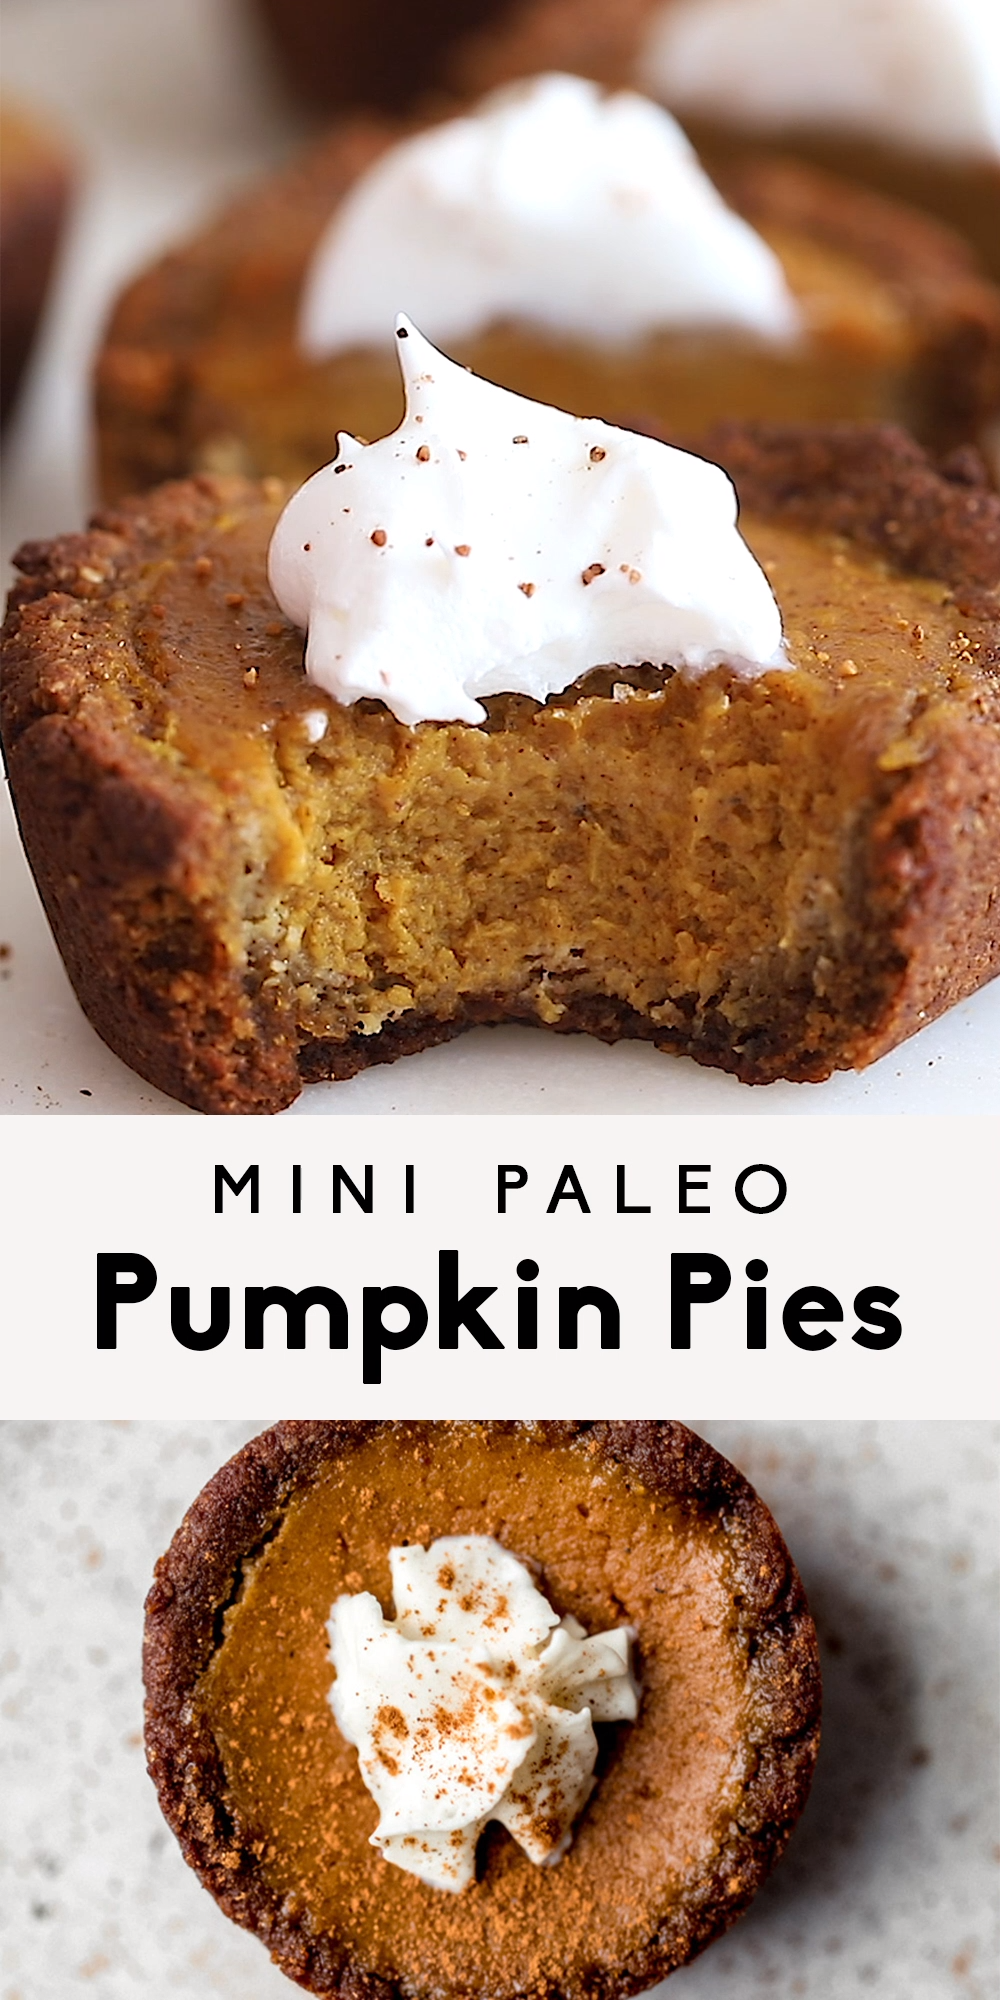 Mini Paleo Pumpkin Pies with Gingerbread Cookie Crust -   18 desserts Gluten Free glutenfree ideas